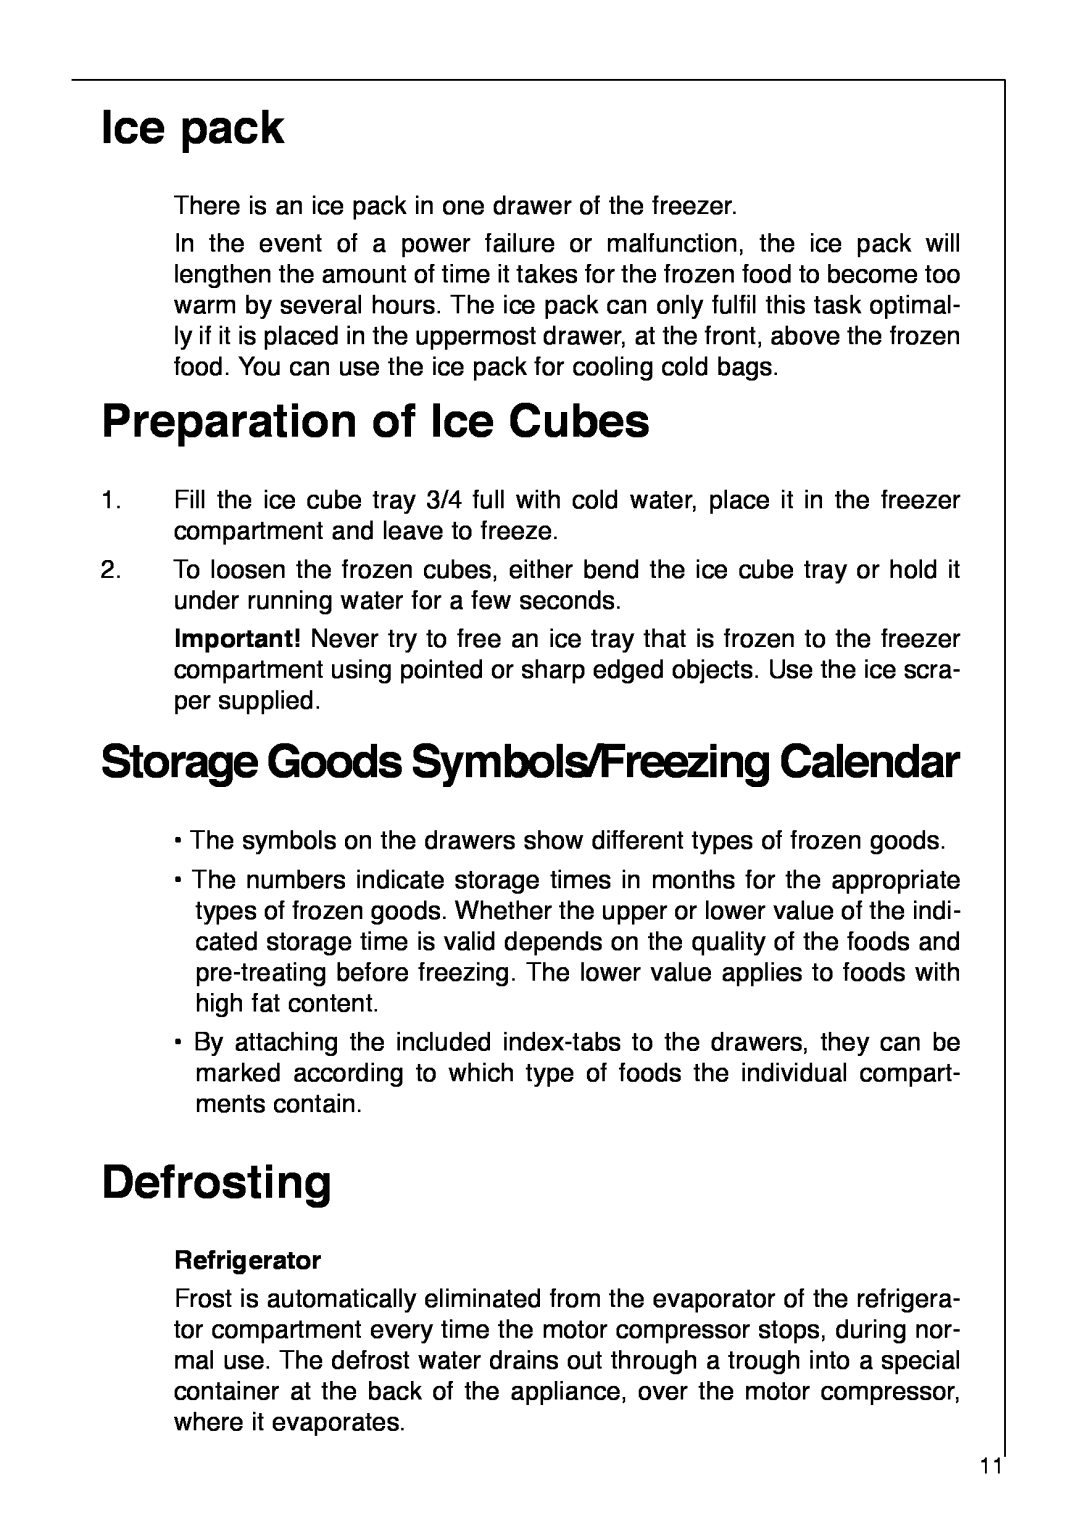 Electrolux SANTO 2842-4 i Ice pack, Preparation of Ice Cubes, Storage Goods Symbols/Freezing Calendar, Defrosting 